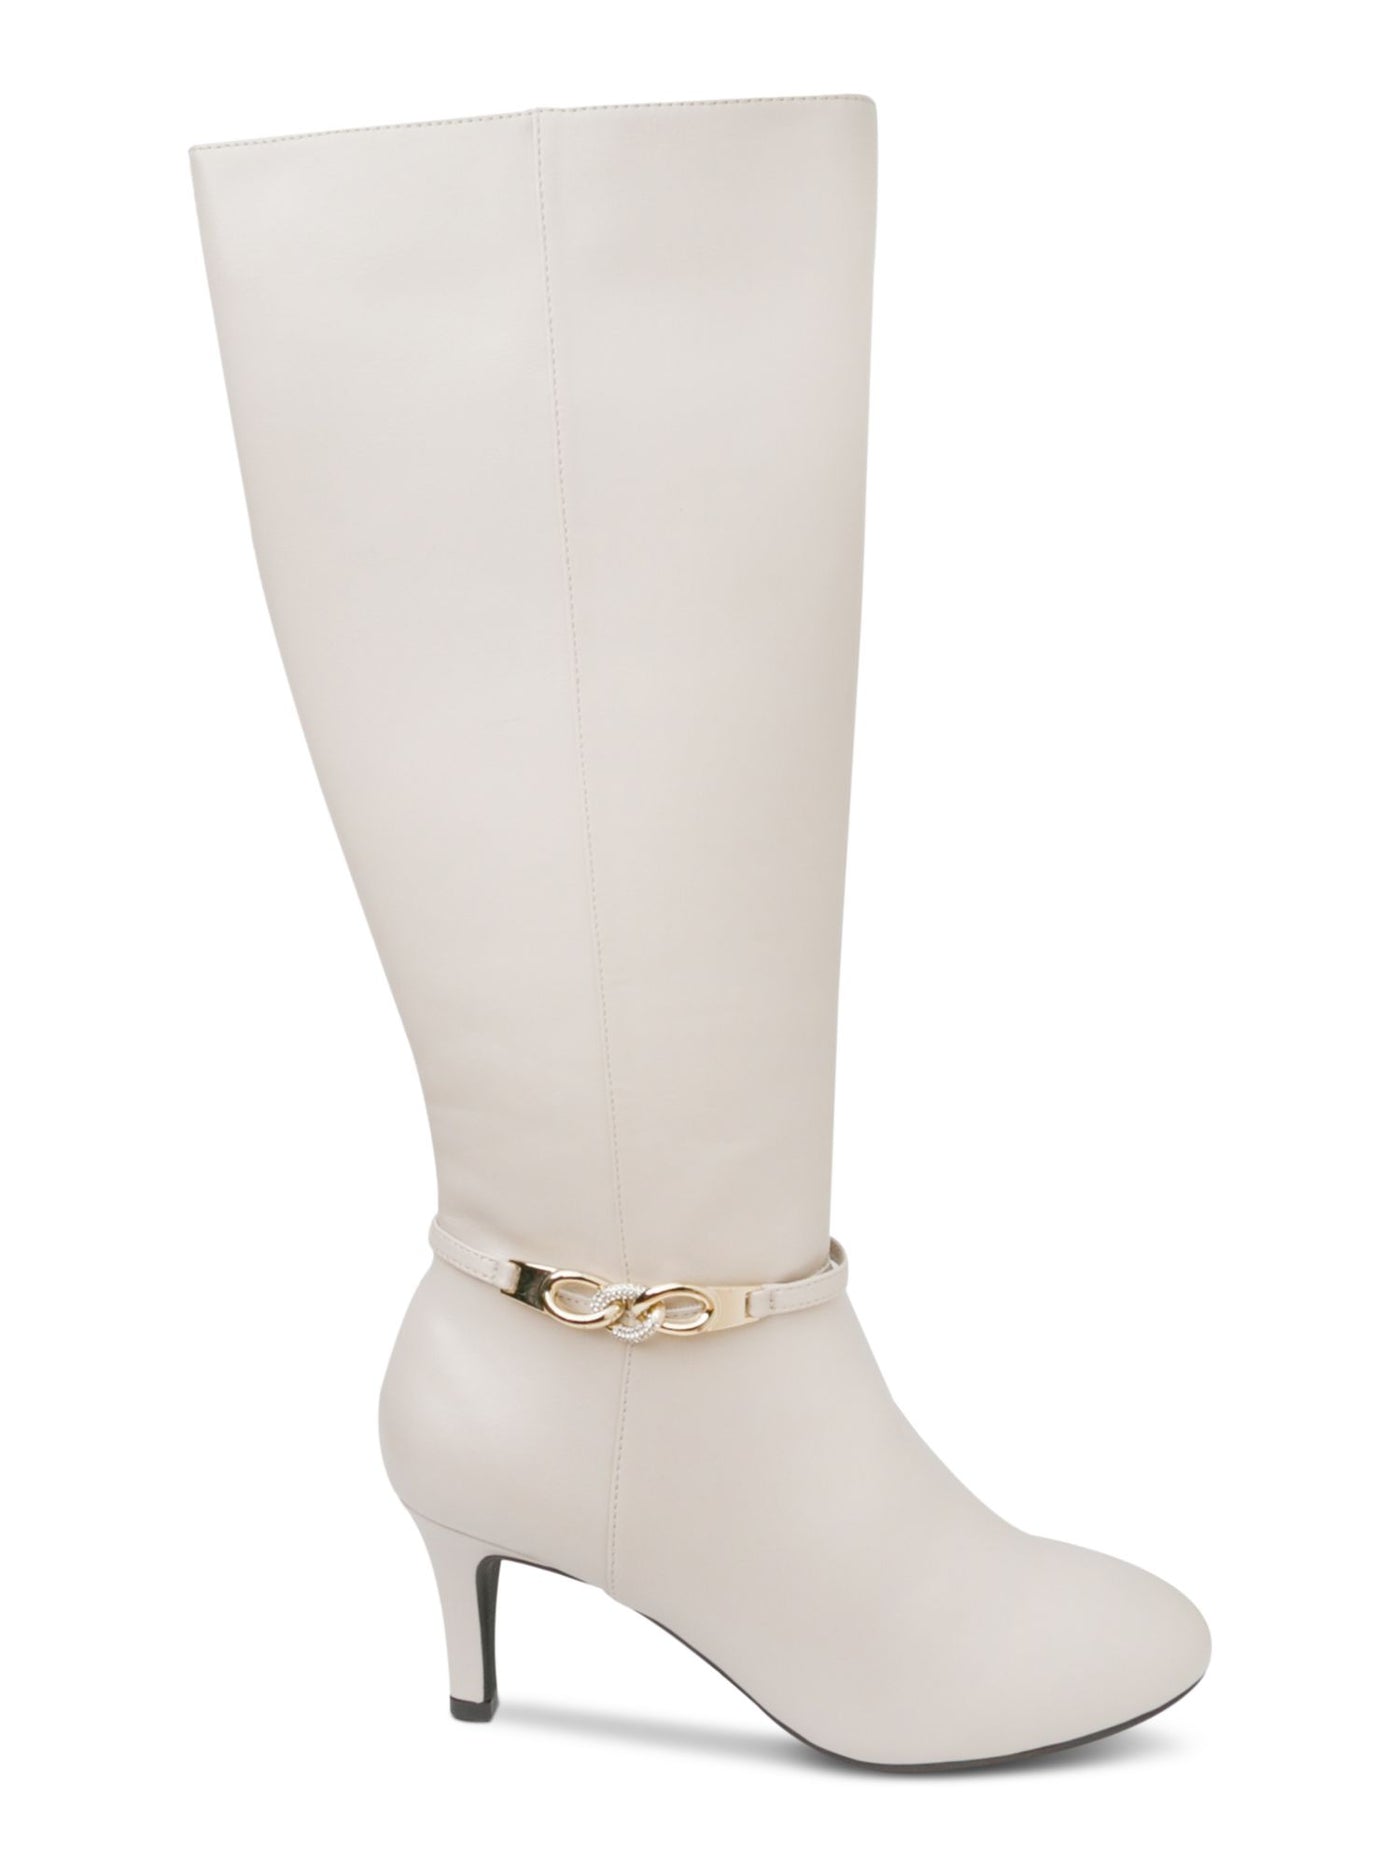 KAREN SCOTT Womens Beige Embellished Chain Accent Goring Cushioned Hanna Almond Toe Kitten Heel Zip-Up Dress Boots 5 M